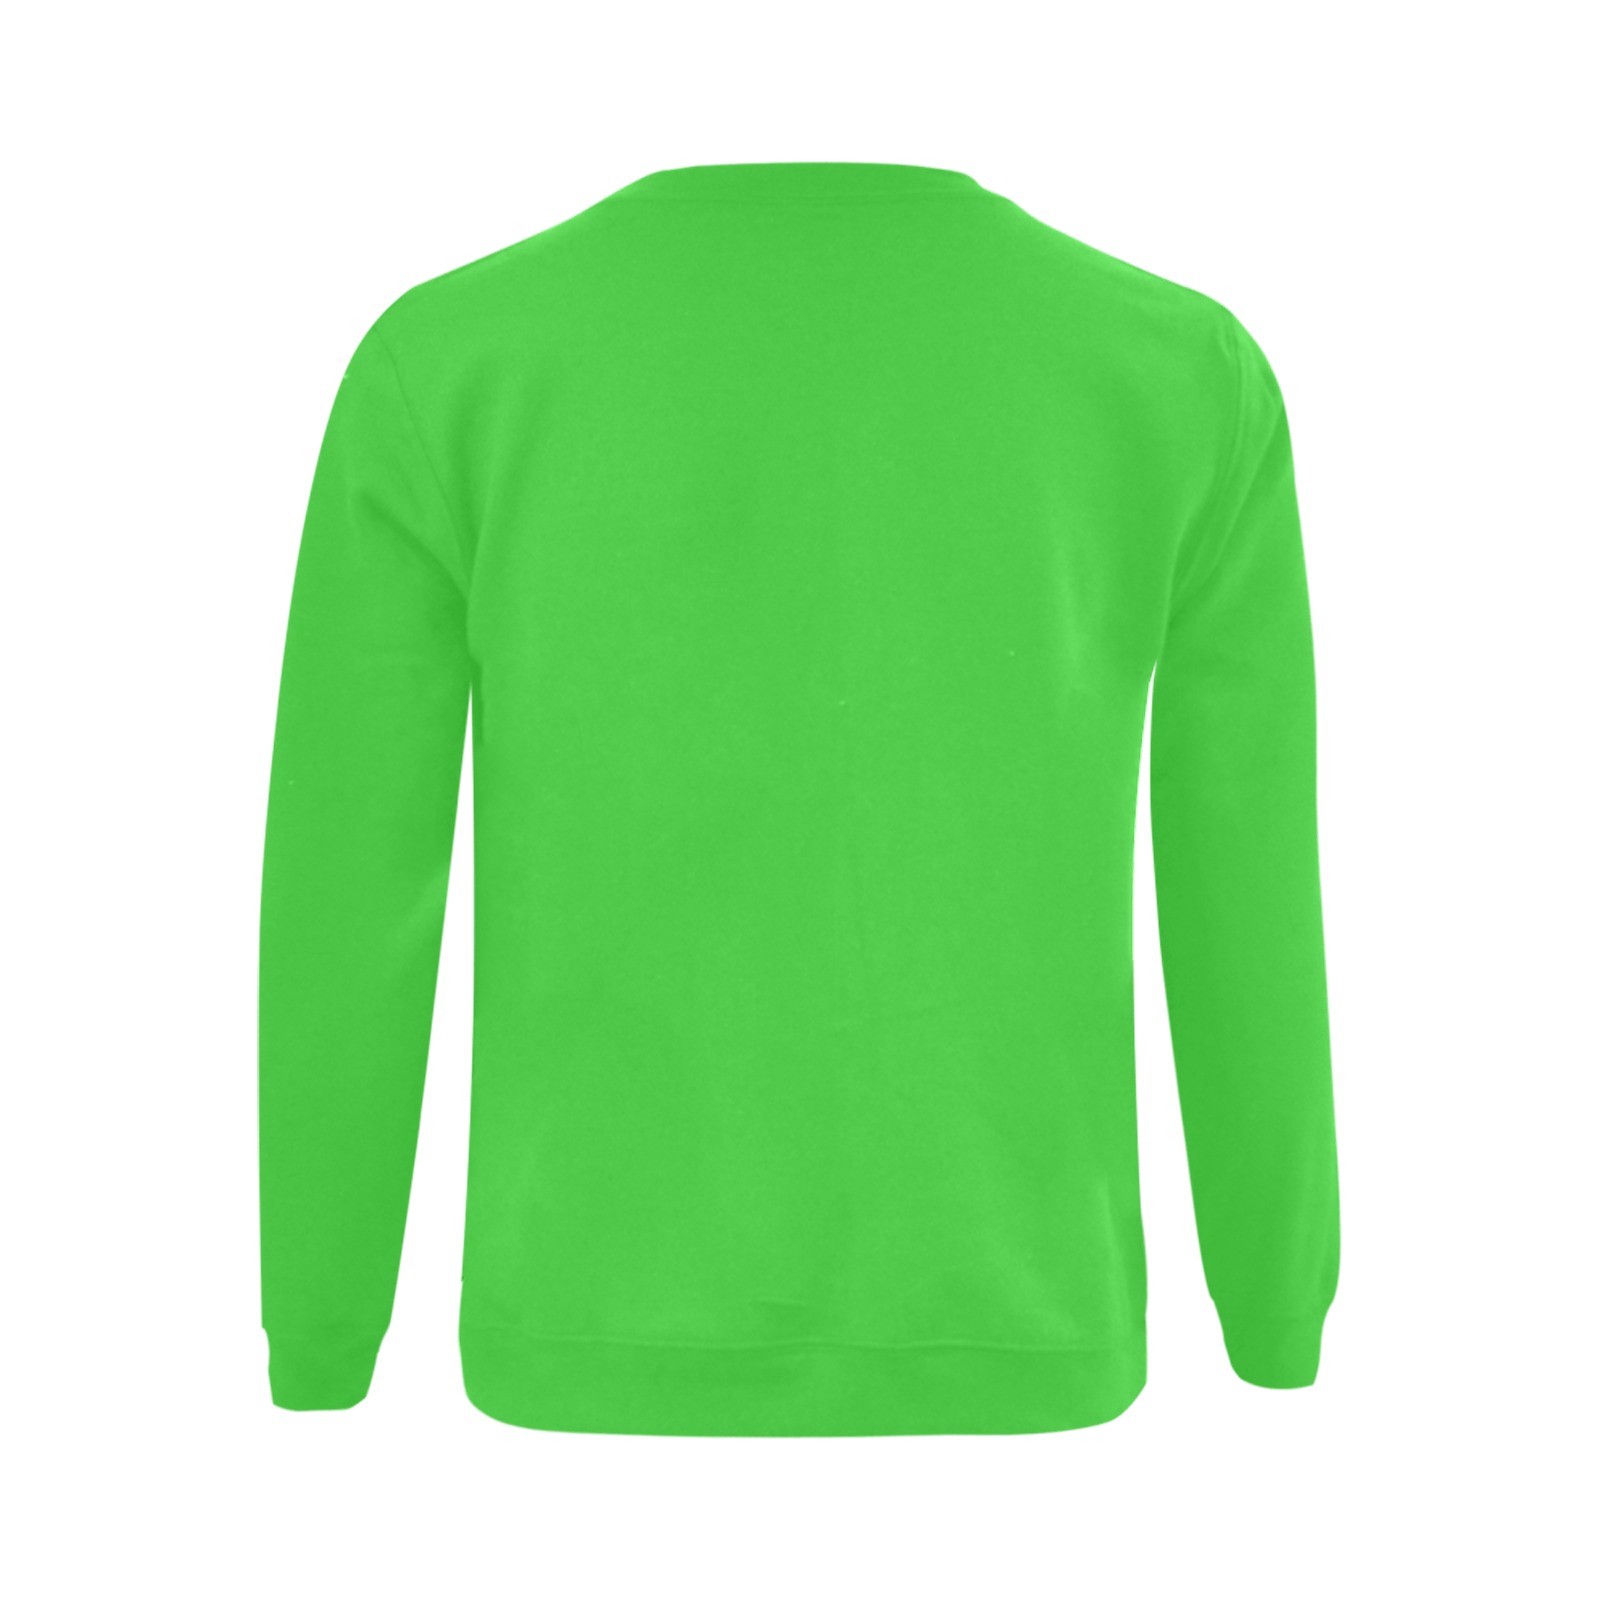 The Coffee Gnome Gildan Crewneck Sweatshirt(NEW) (Model H01)